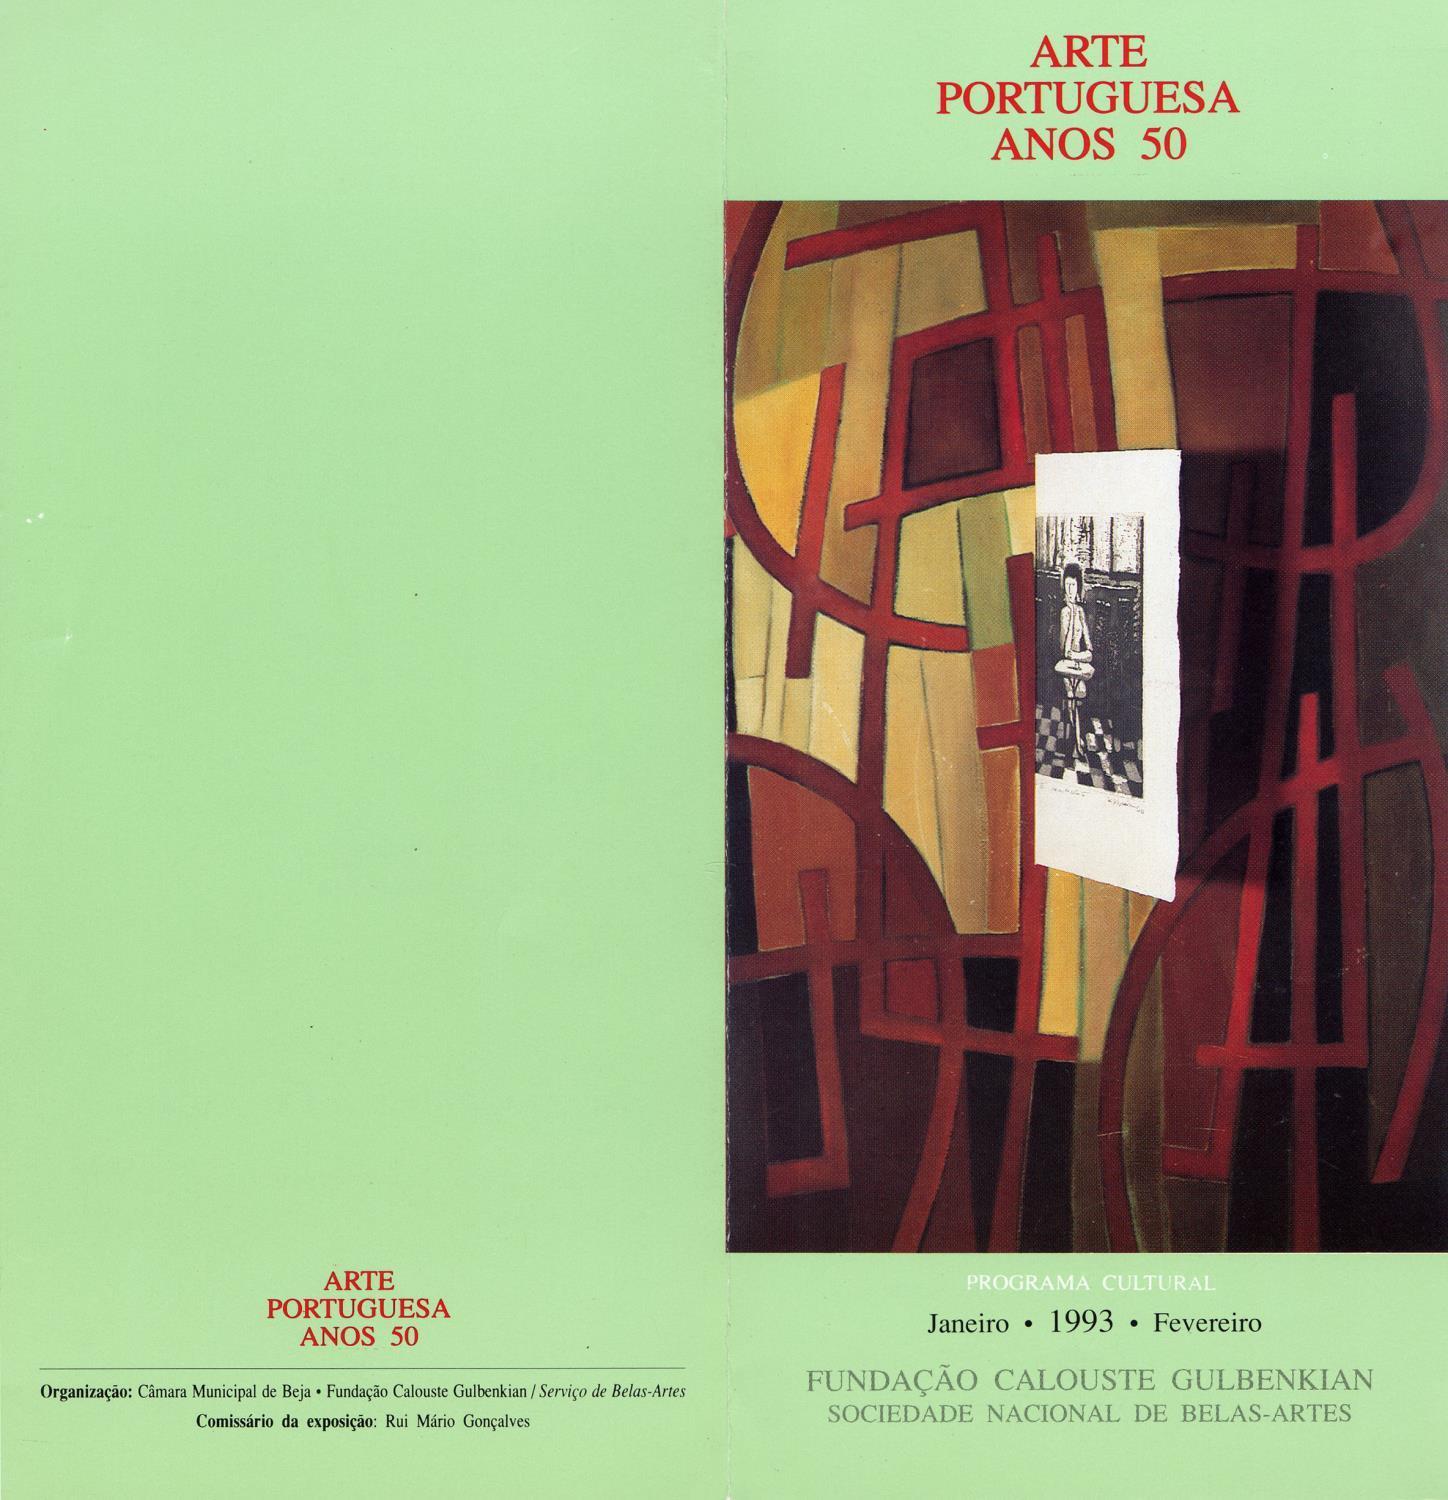 Arte Portuguesa nos Anos 50. Sociedade Nacional de Belas-Artes